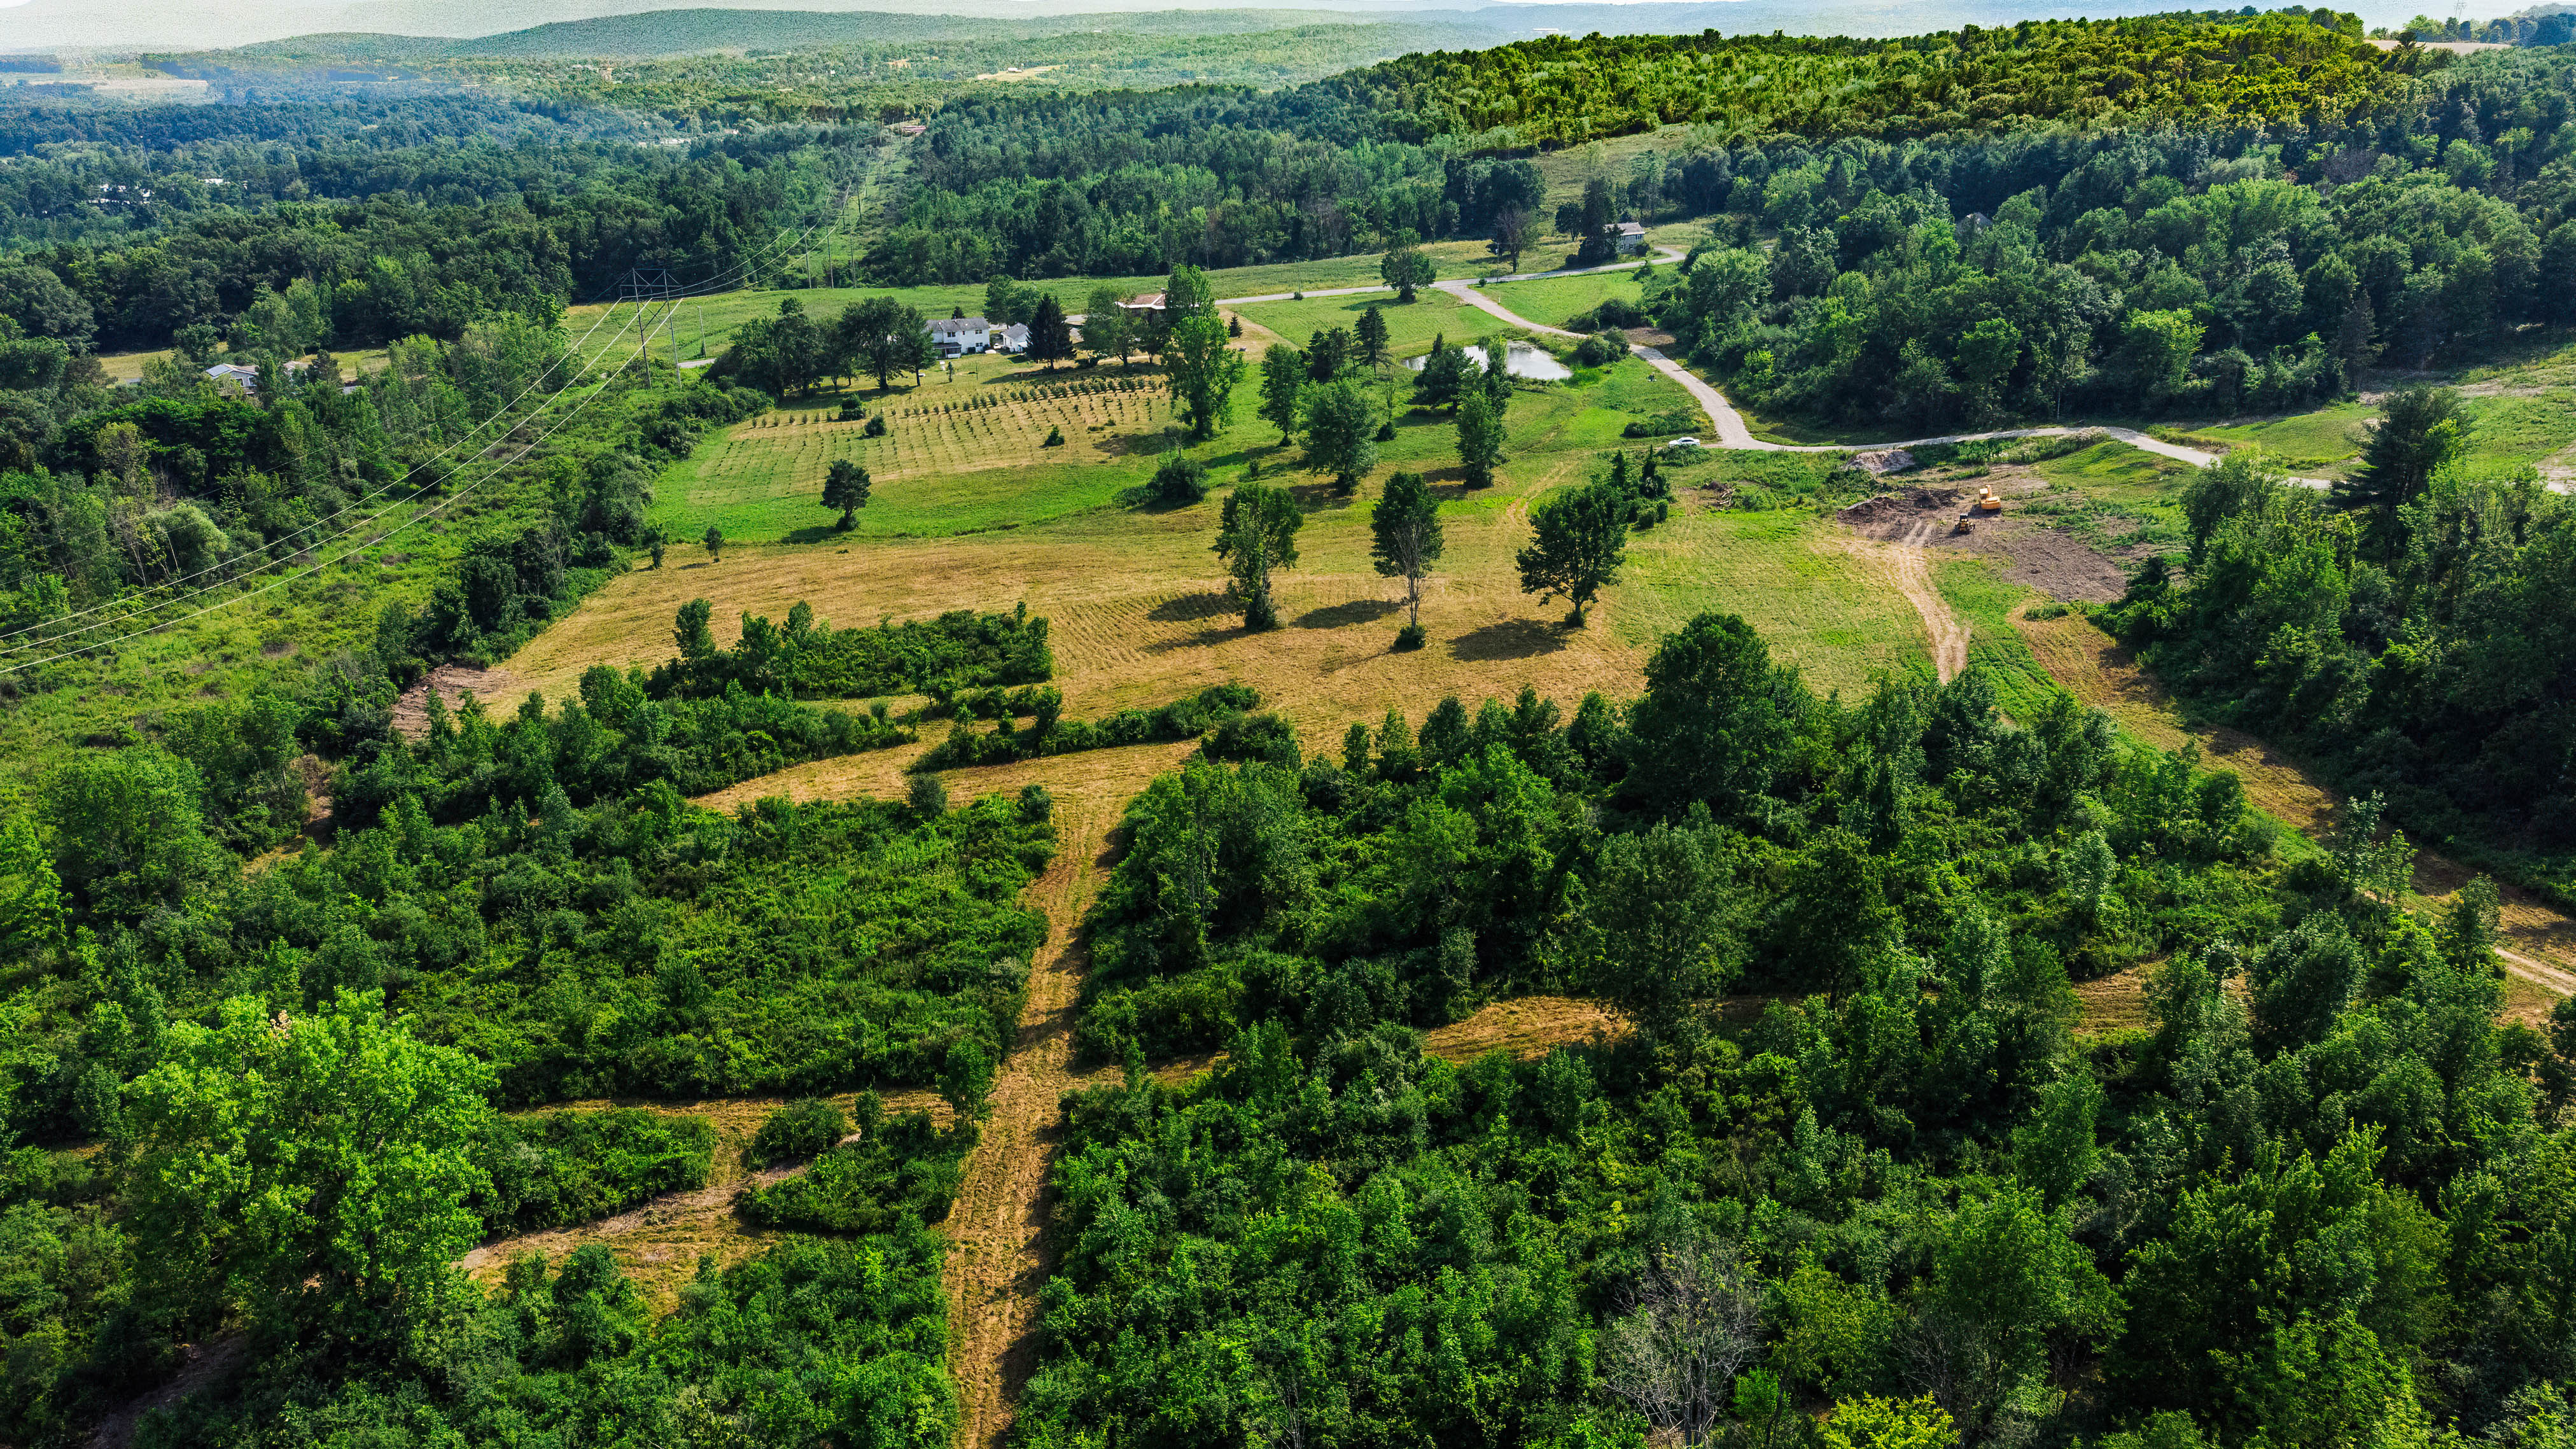 UAV view of land development project